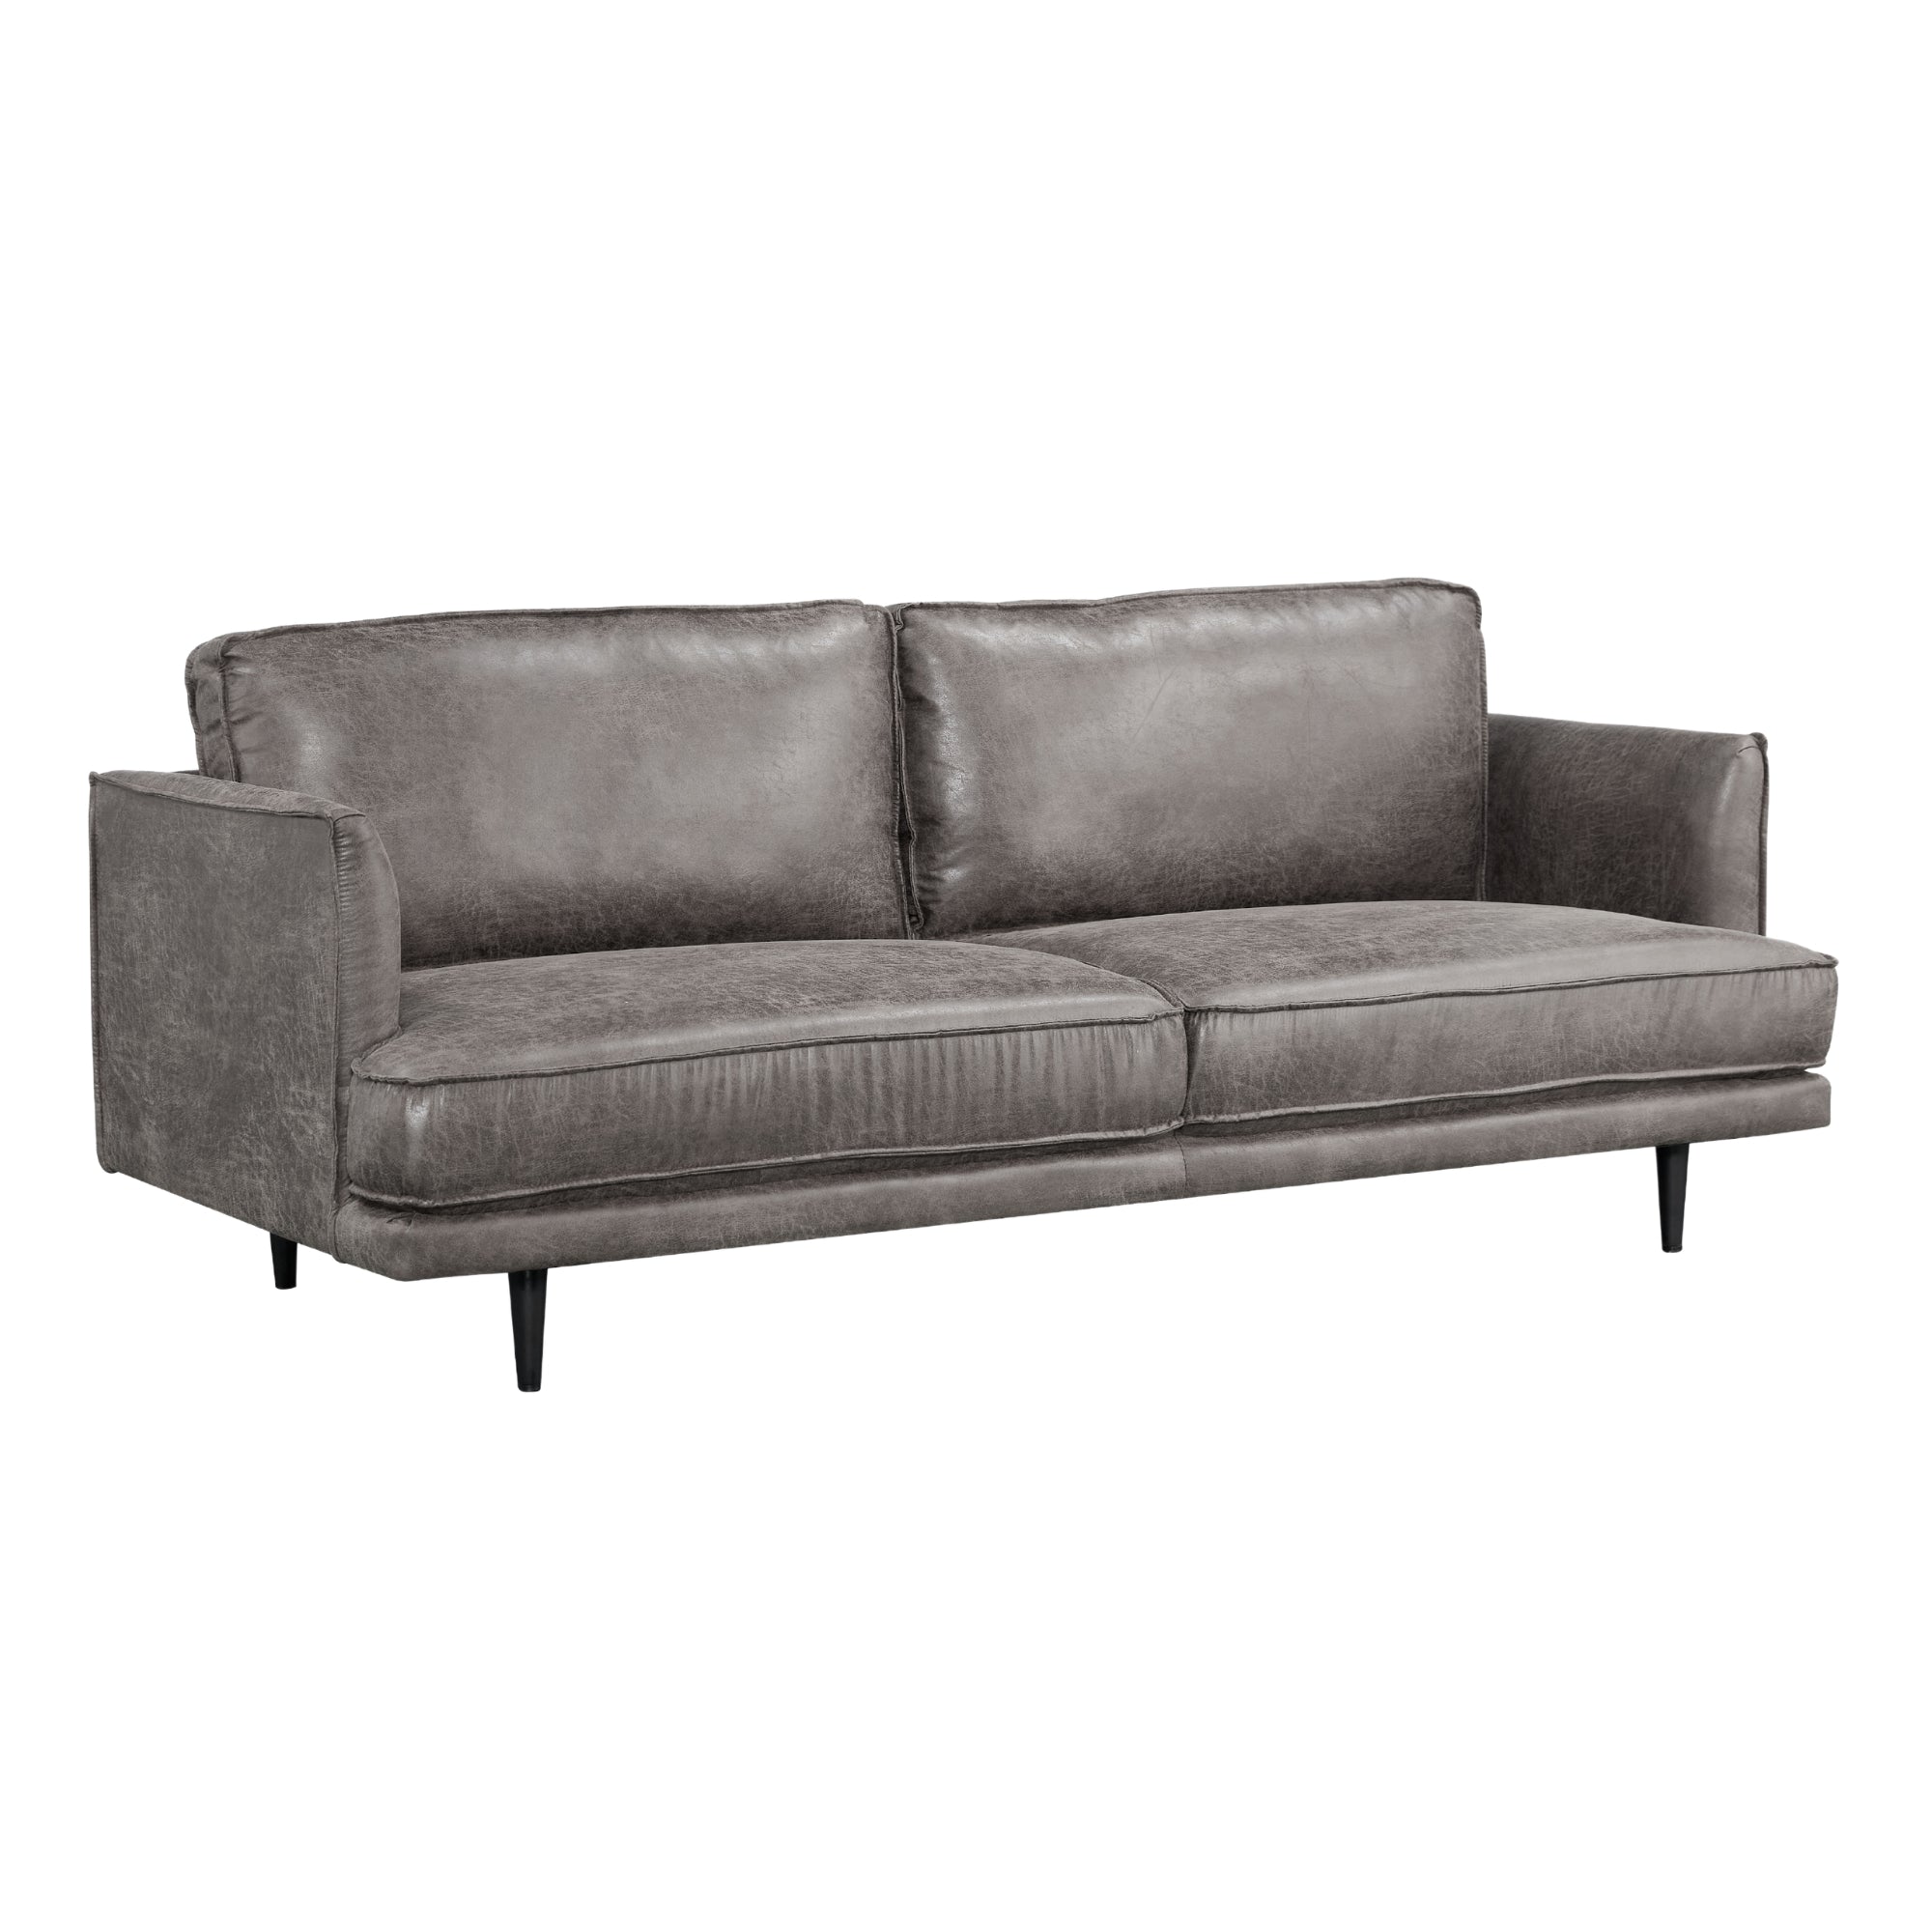 Durable Fabric 3+2 Seater Sofa Set, Cushion Seating, Grey